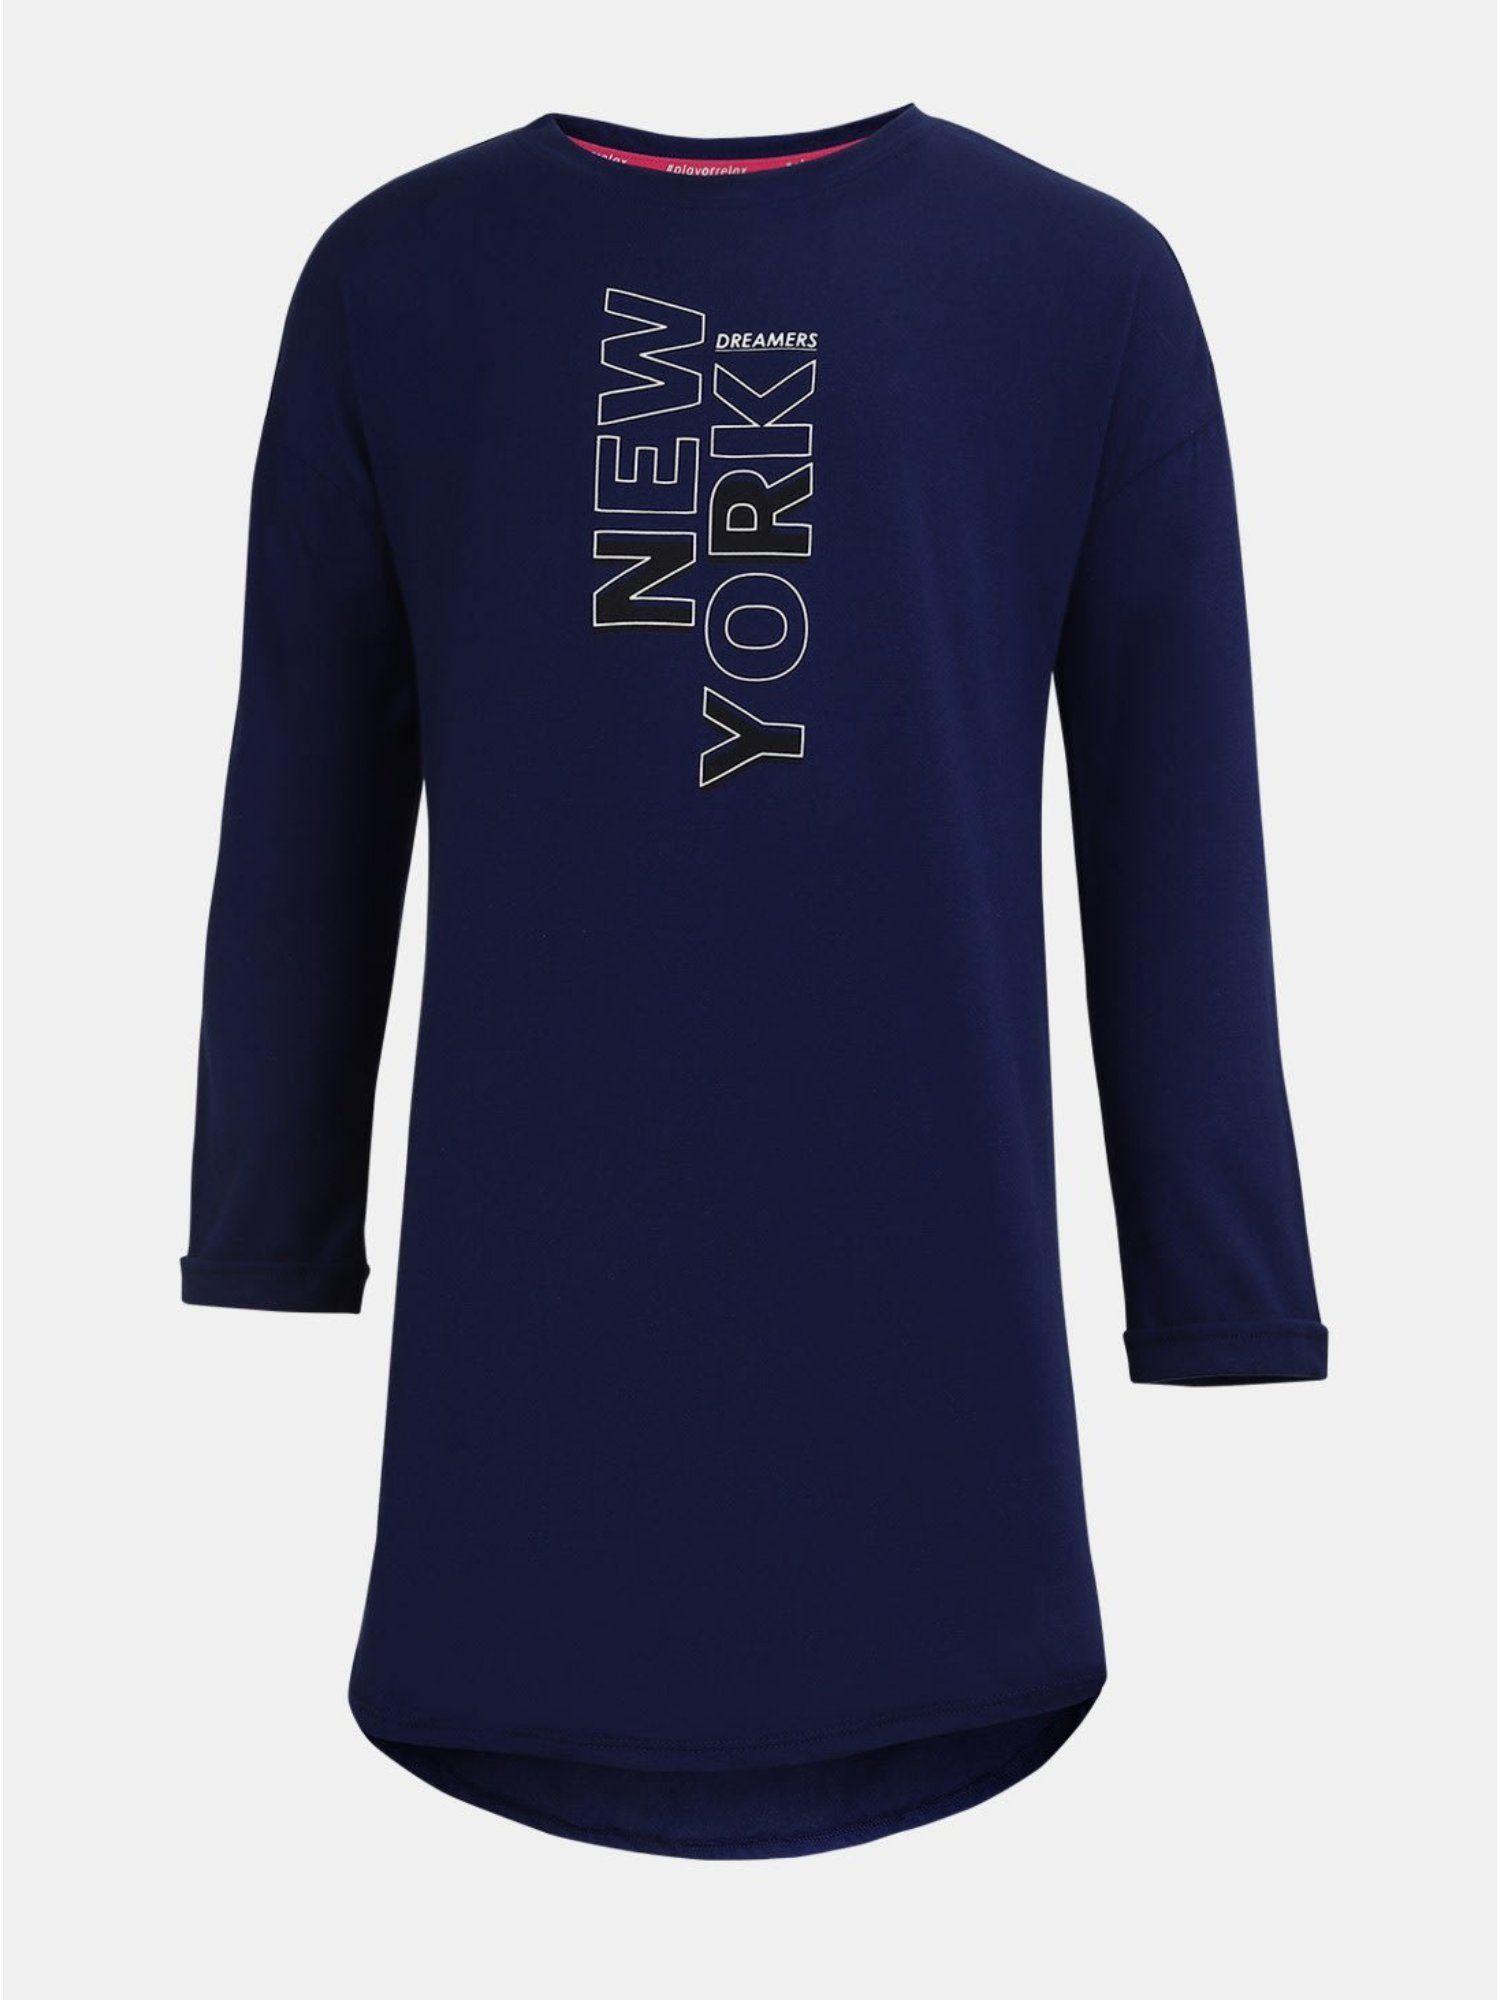 ag64 cotton round neck full sleeves t-shirt for girls blue